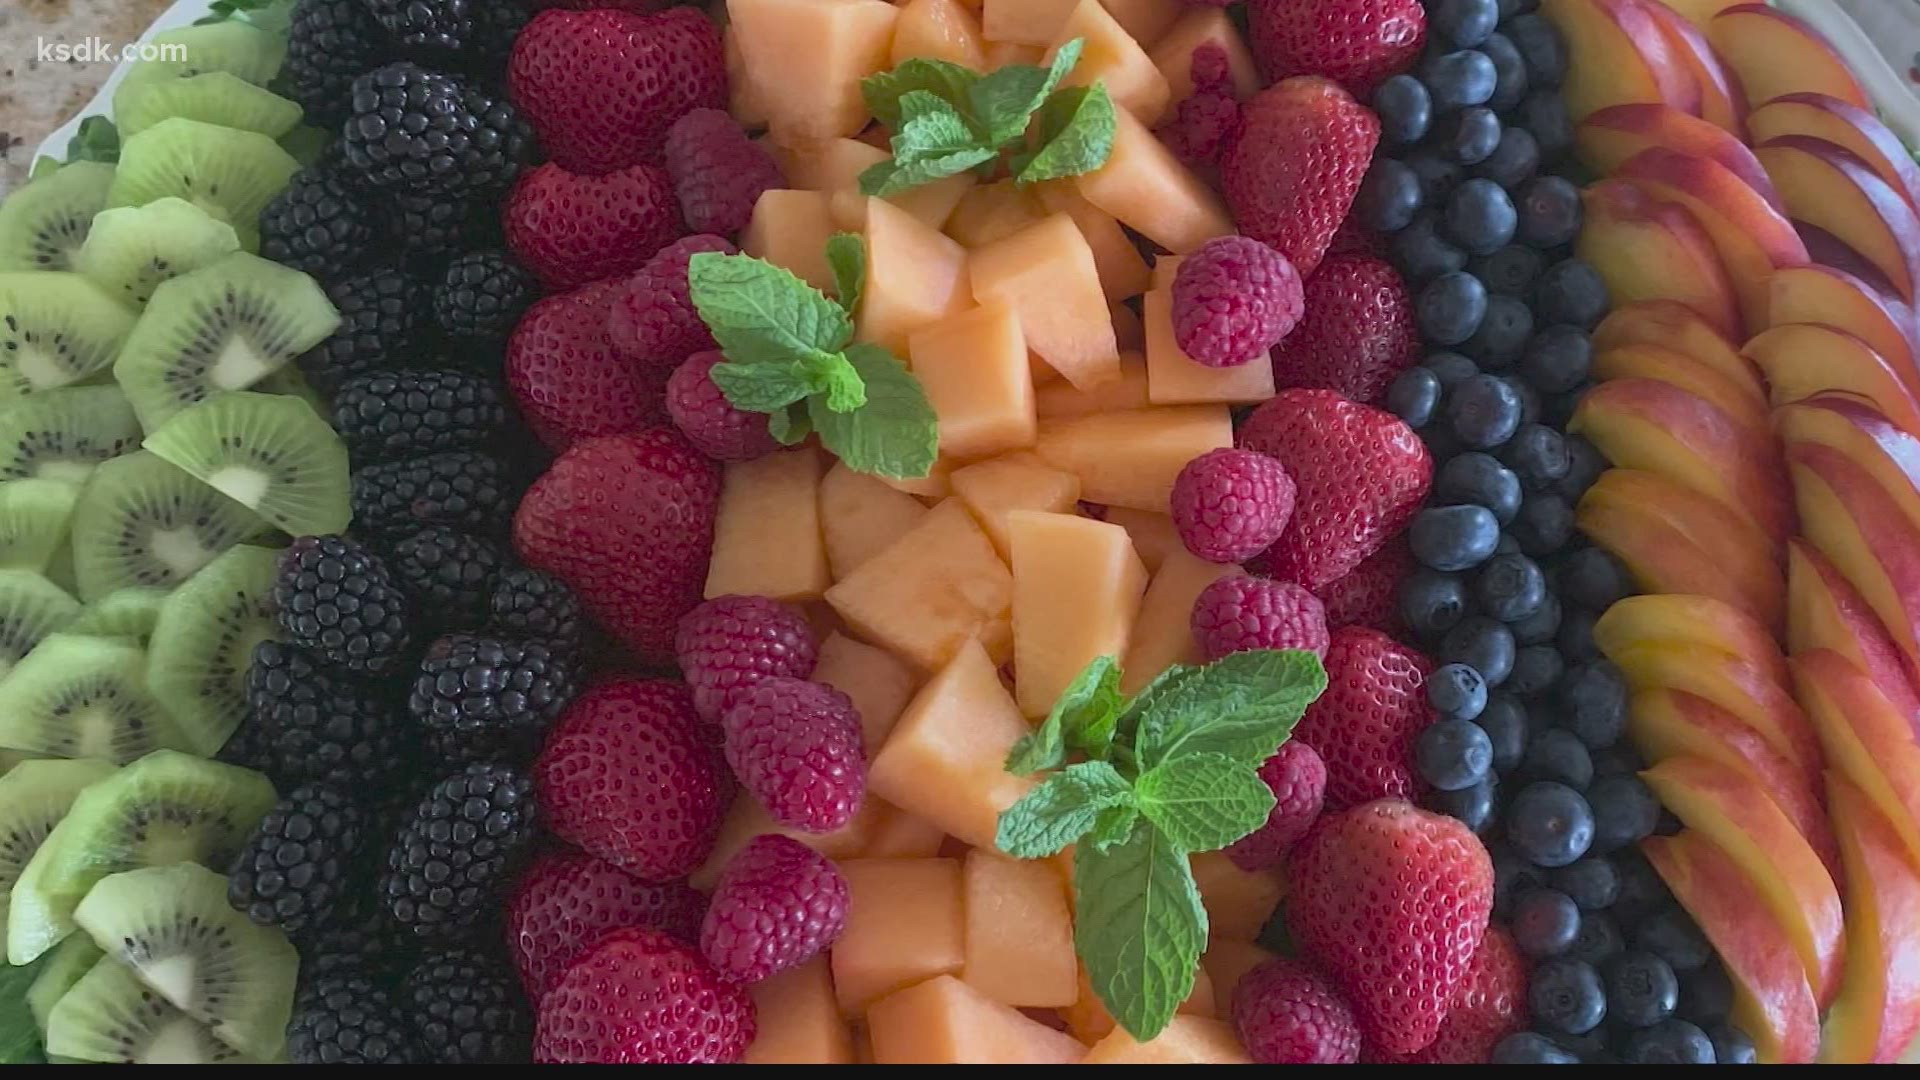 Recipe of the Day: Summer Fruit Salad with Creamy Honey-Orange Dressing